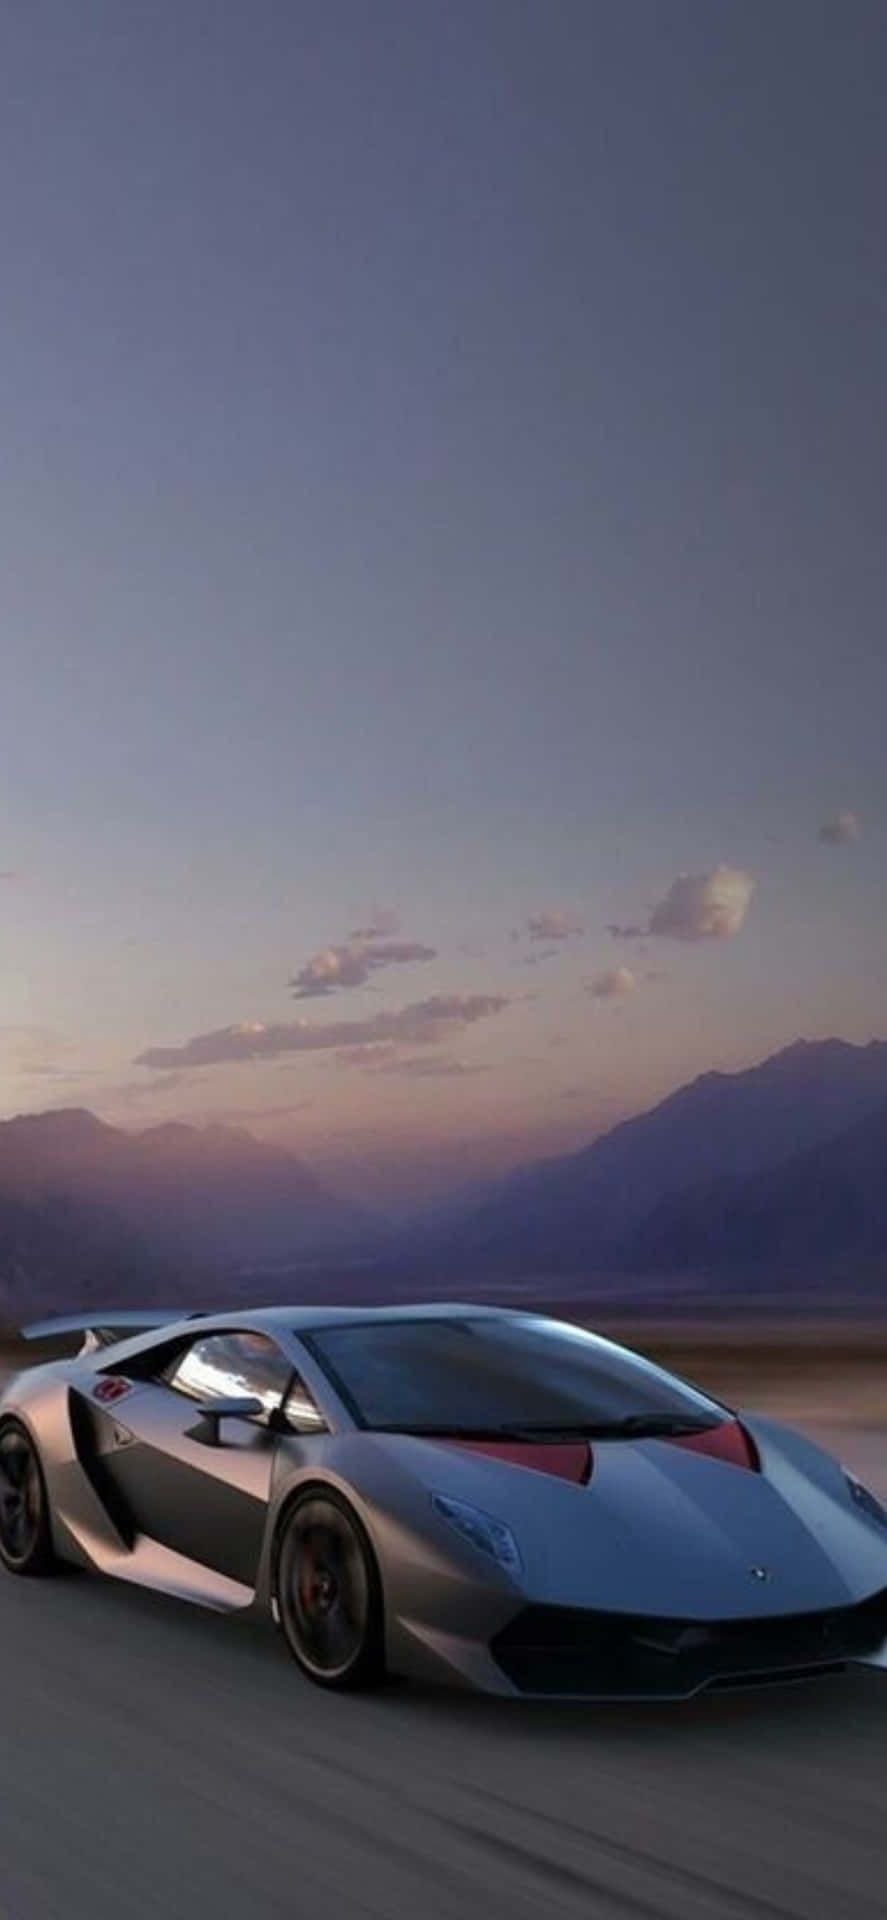 iPhone XS Max Lamborghini Sleek Gray Background